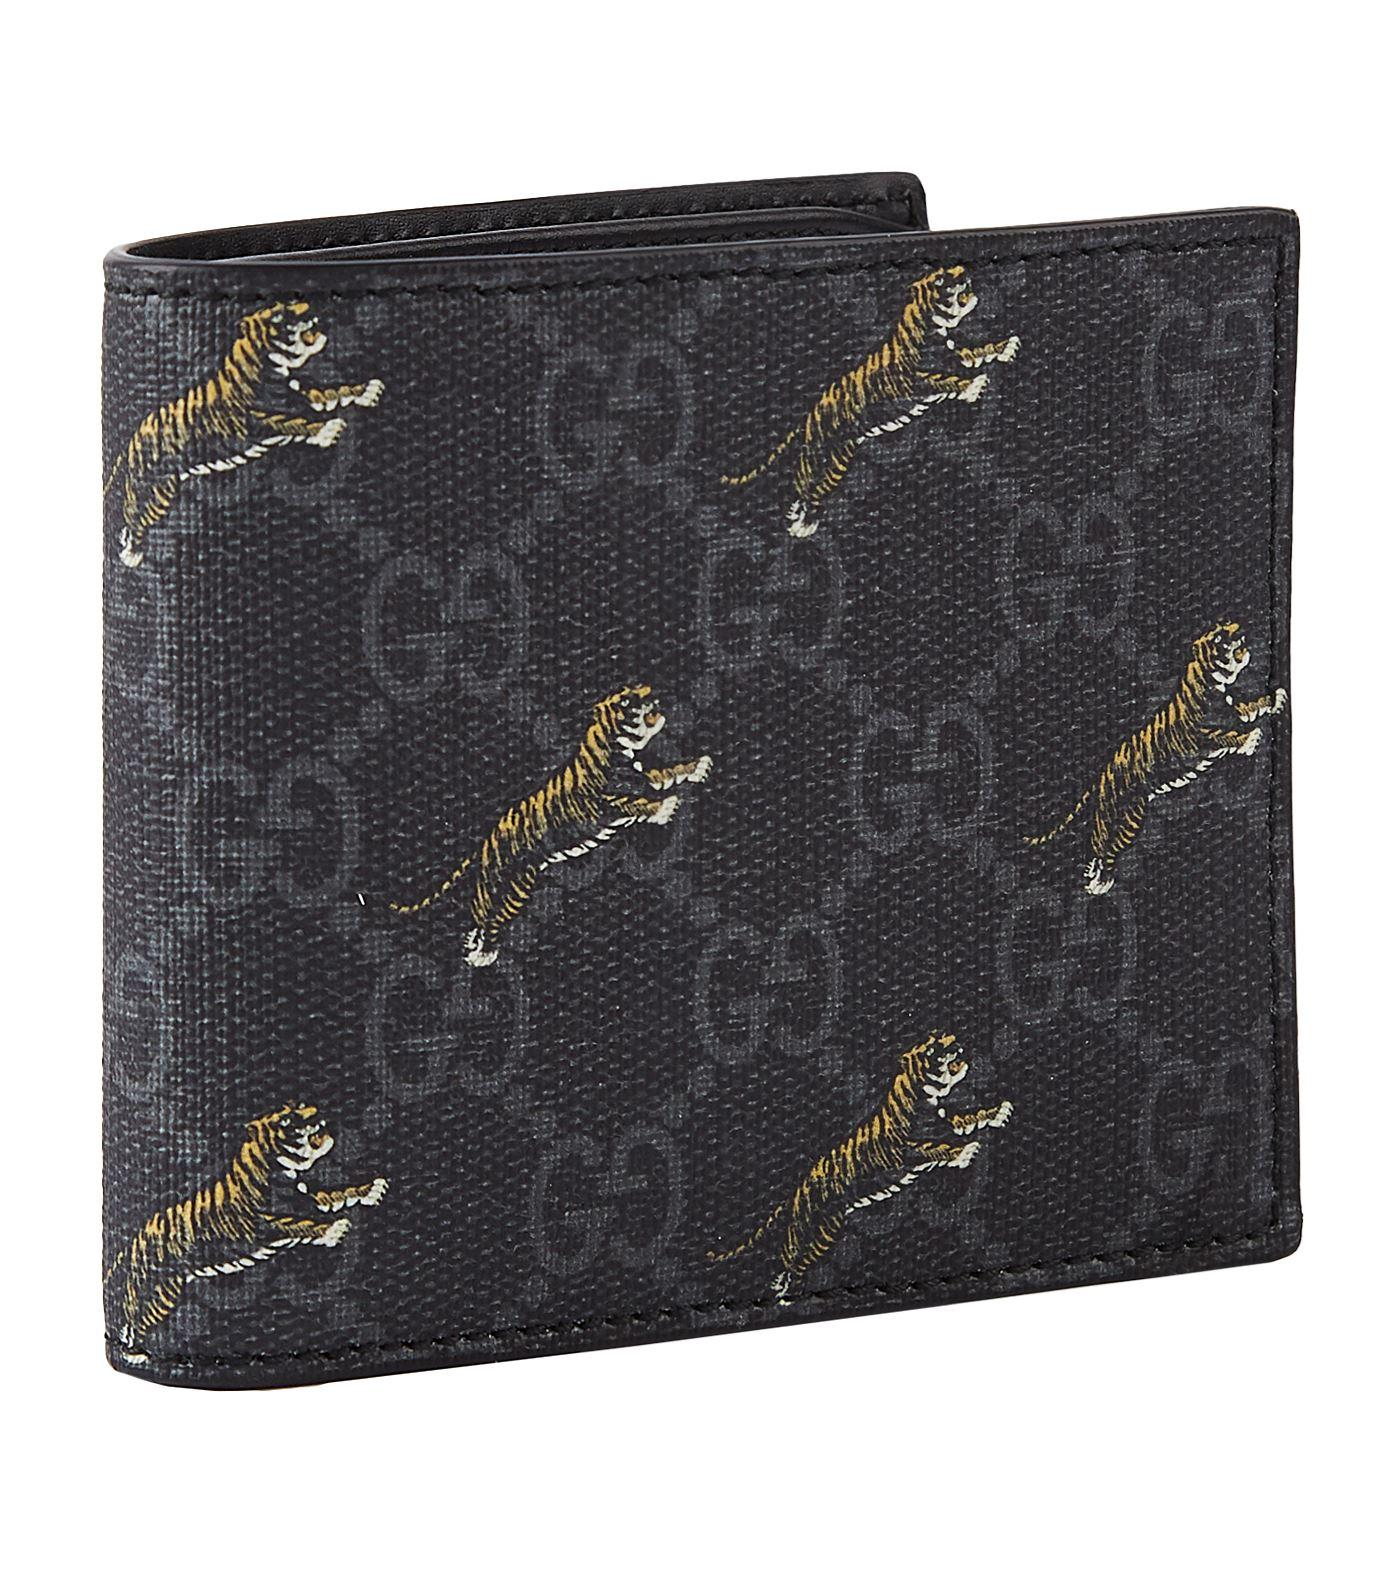 Gucci Supreme Wallet